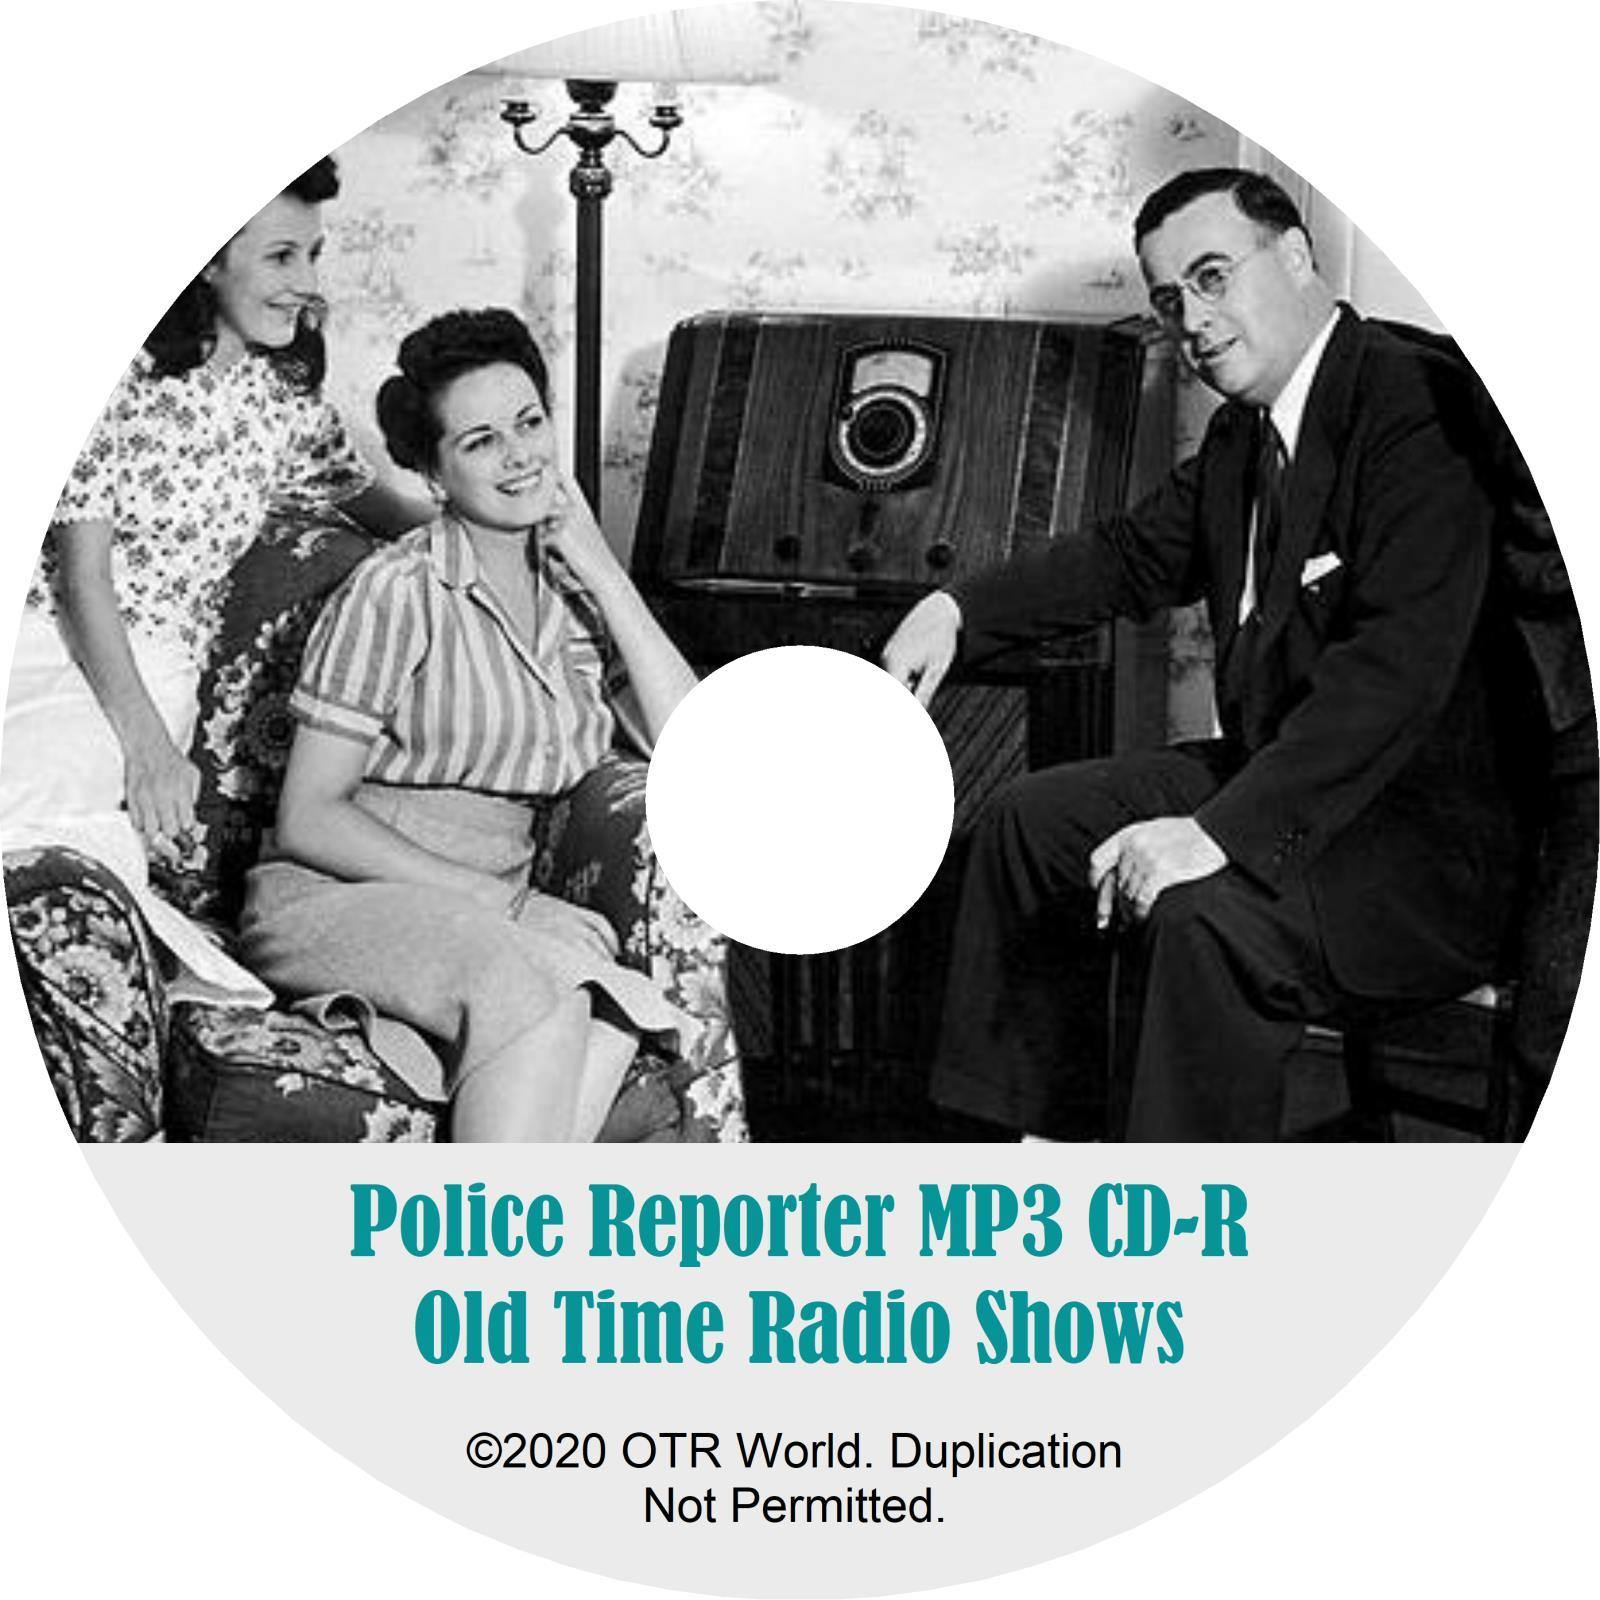 Police Reporter OTR Old Time Radio Shows MP3 On CD 26 Episodes - OTR World